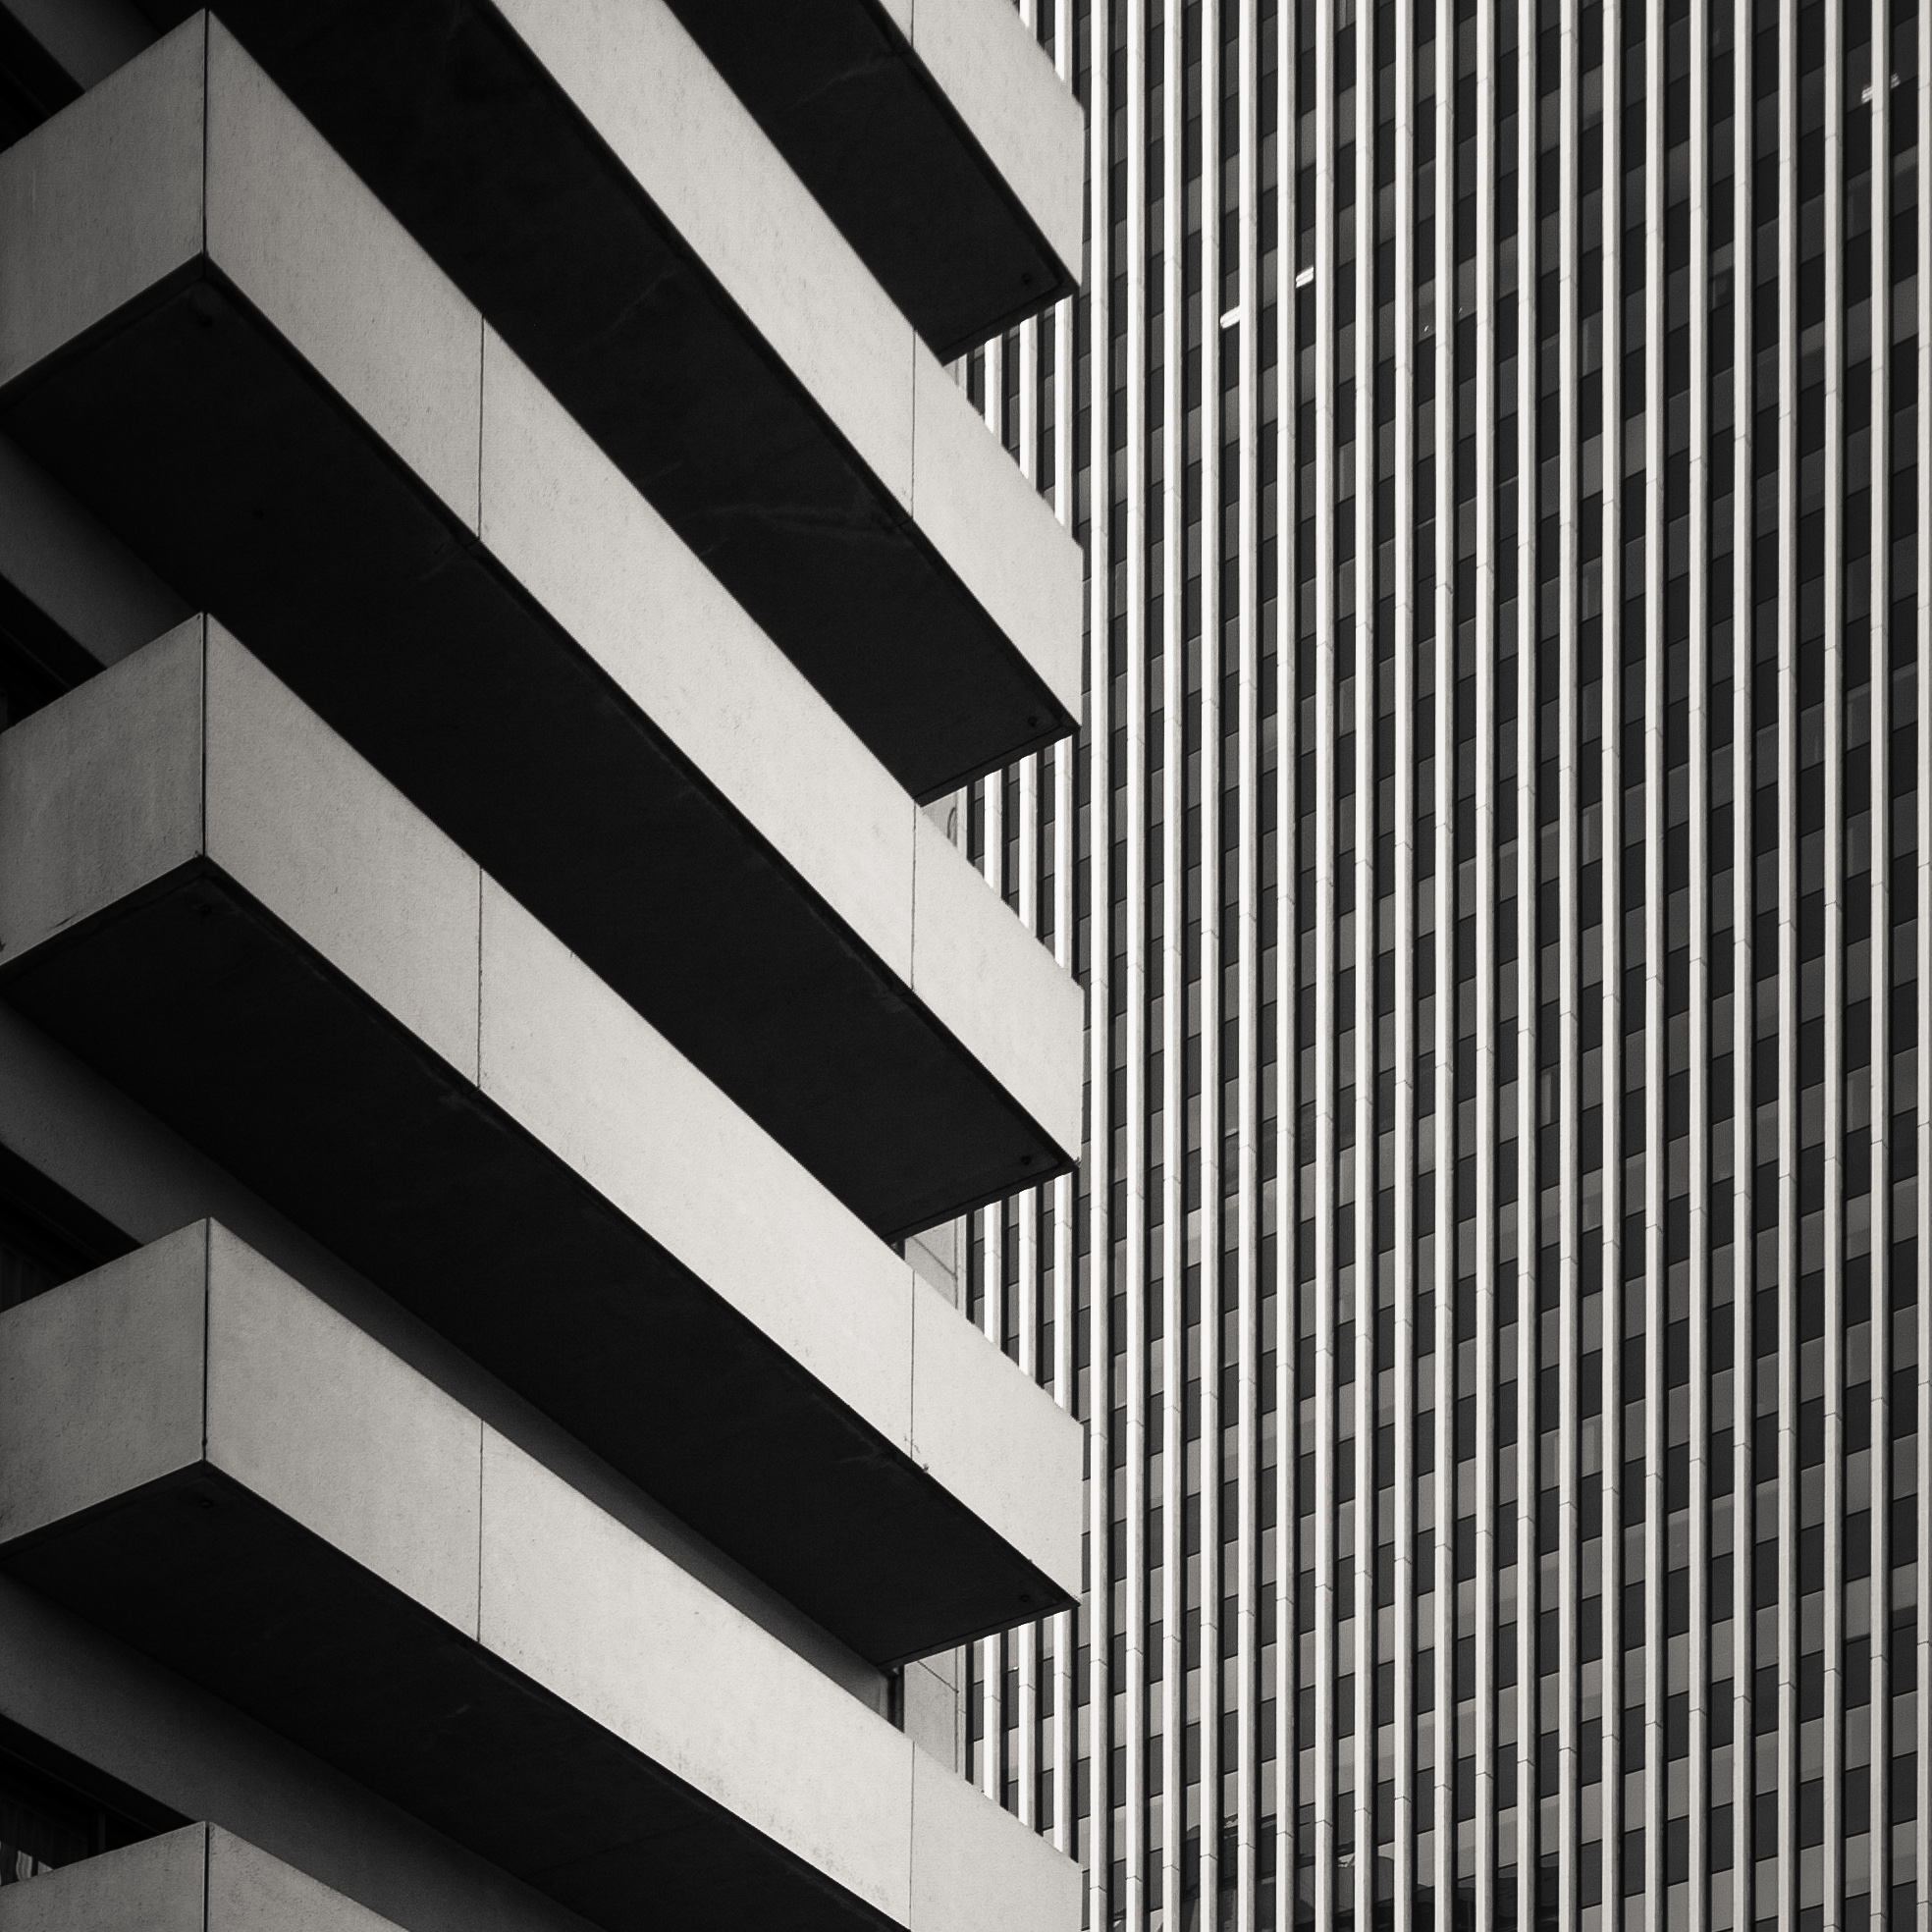 San Francisco Embarcadero black white buildings lines zig zag